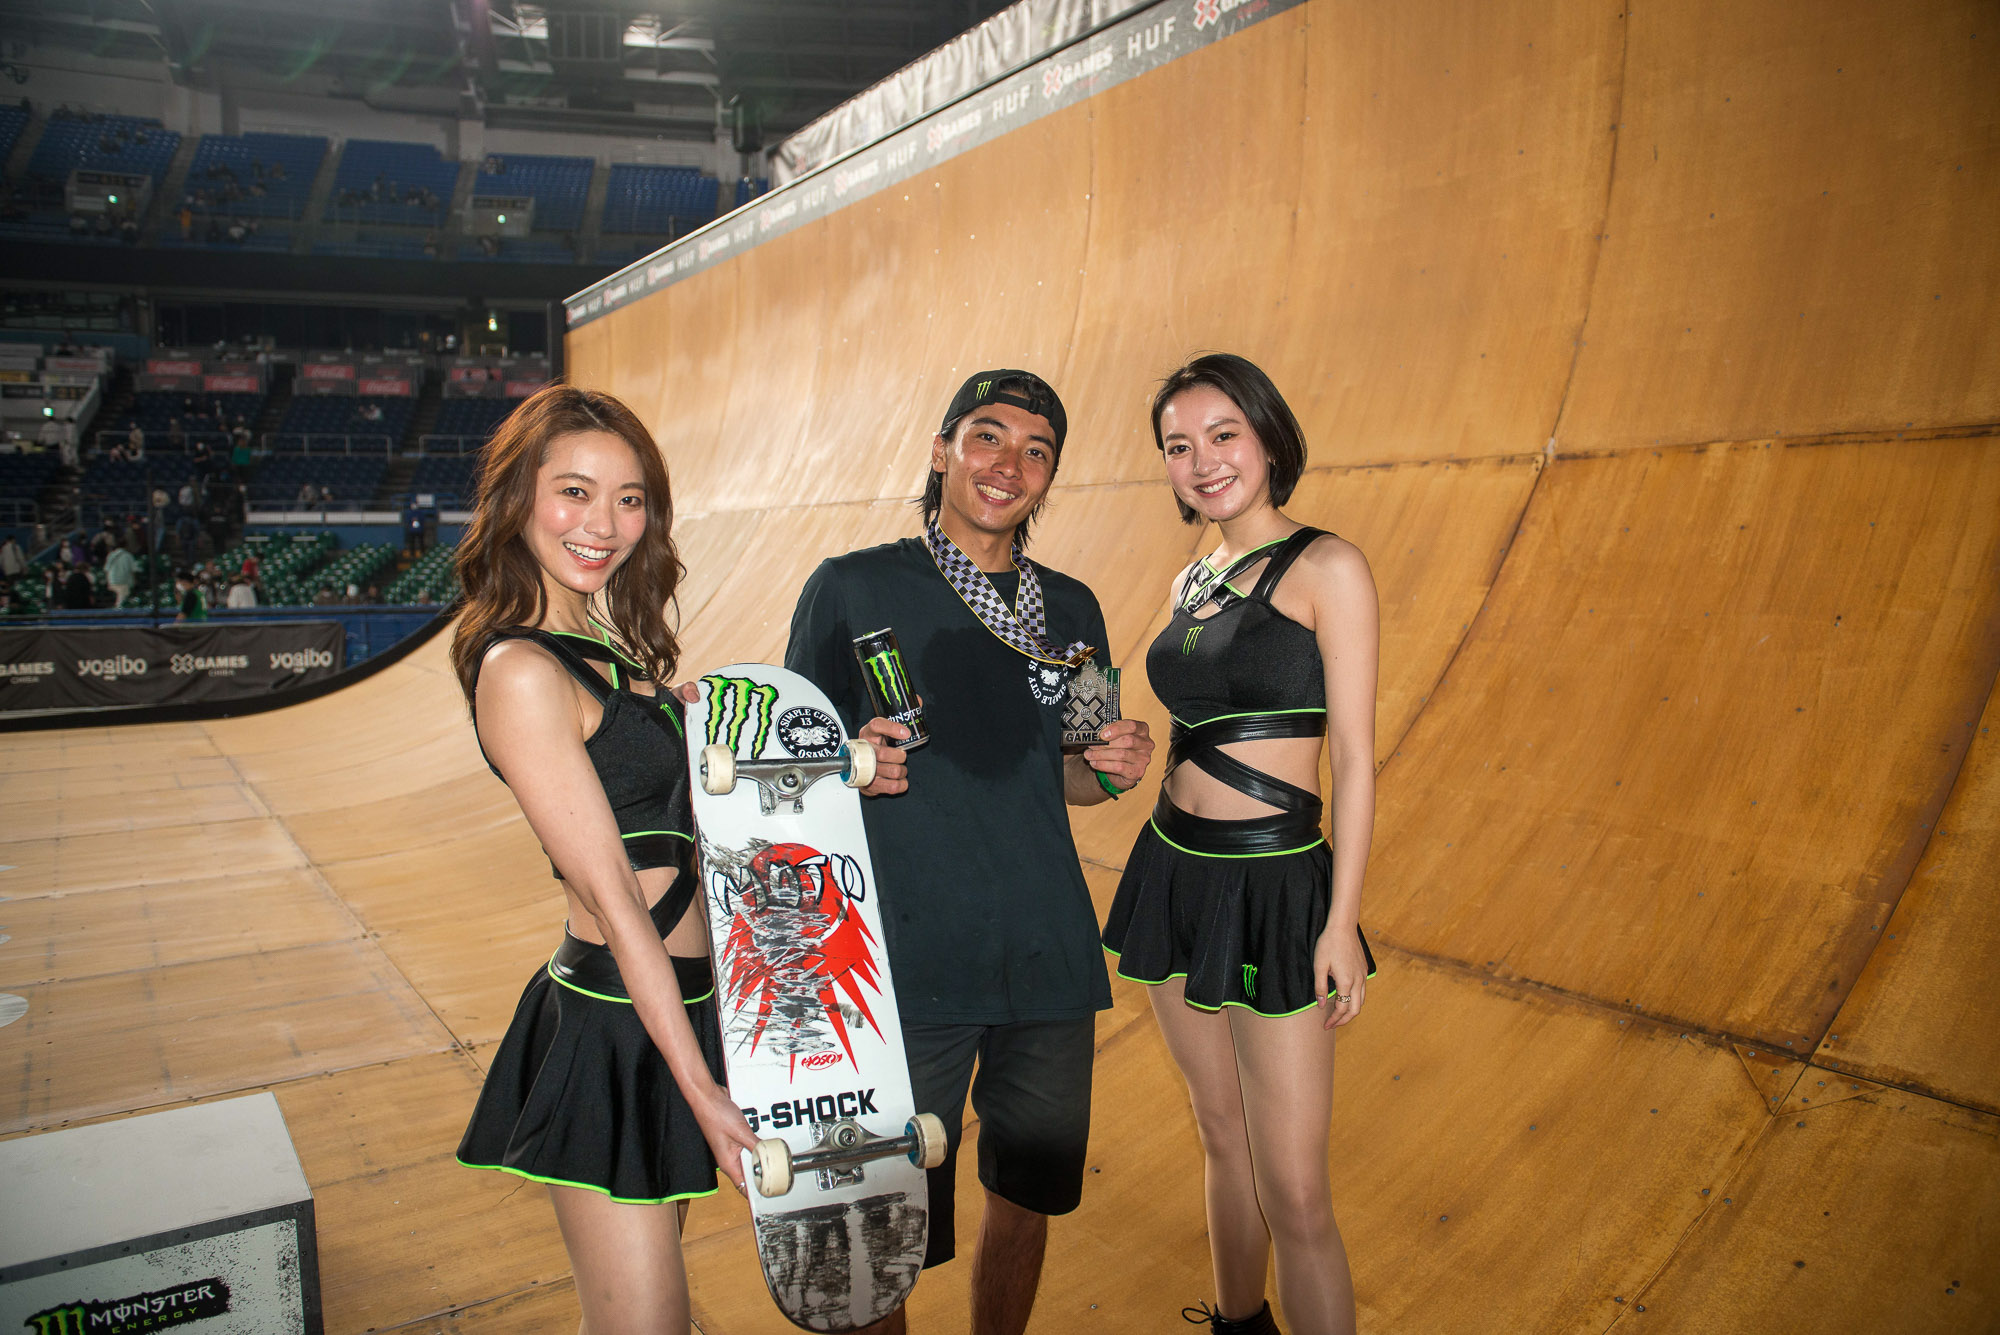 Monster Energy's Moto Shibata Wins Silver in Men's Skateboard Vert at X Games Chiba 2022